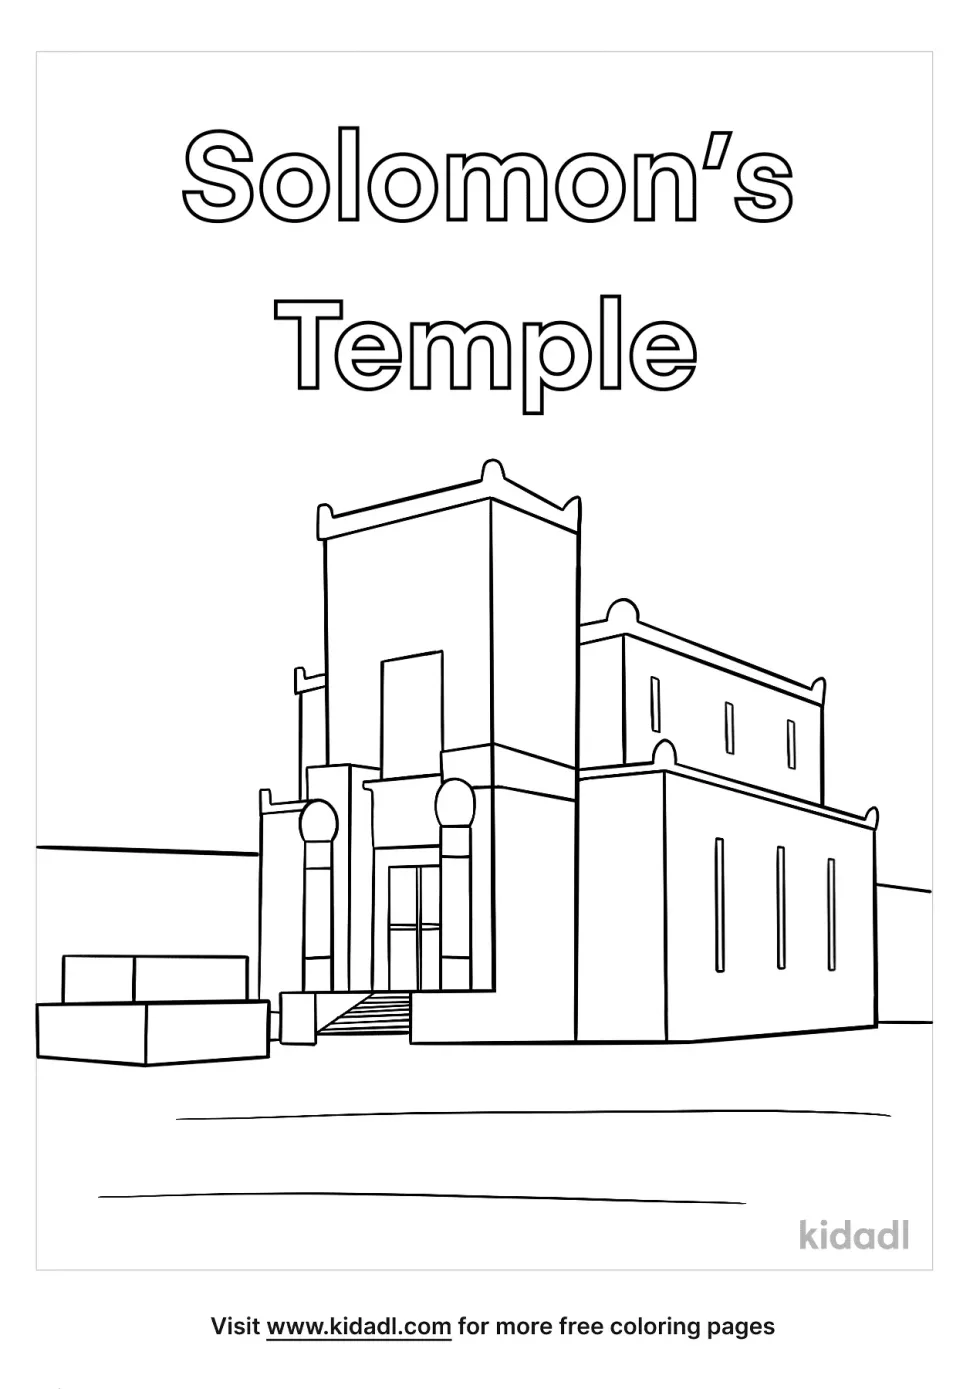 Solomon's Temple Coloring Page